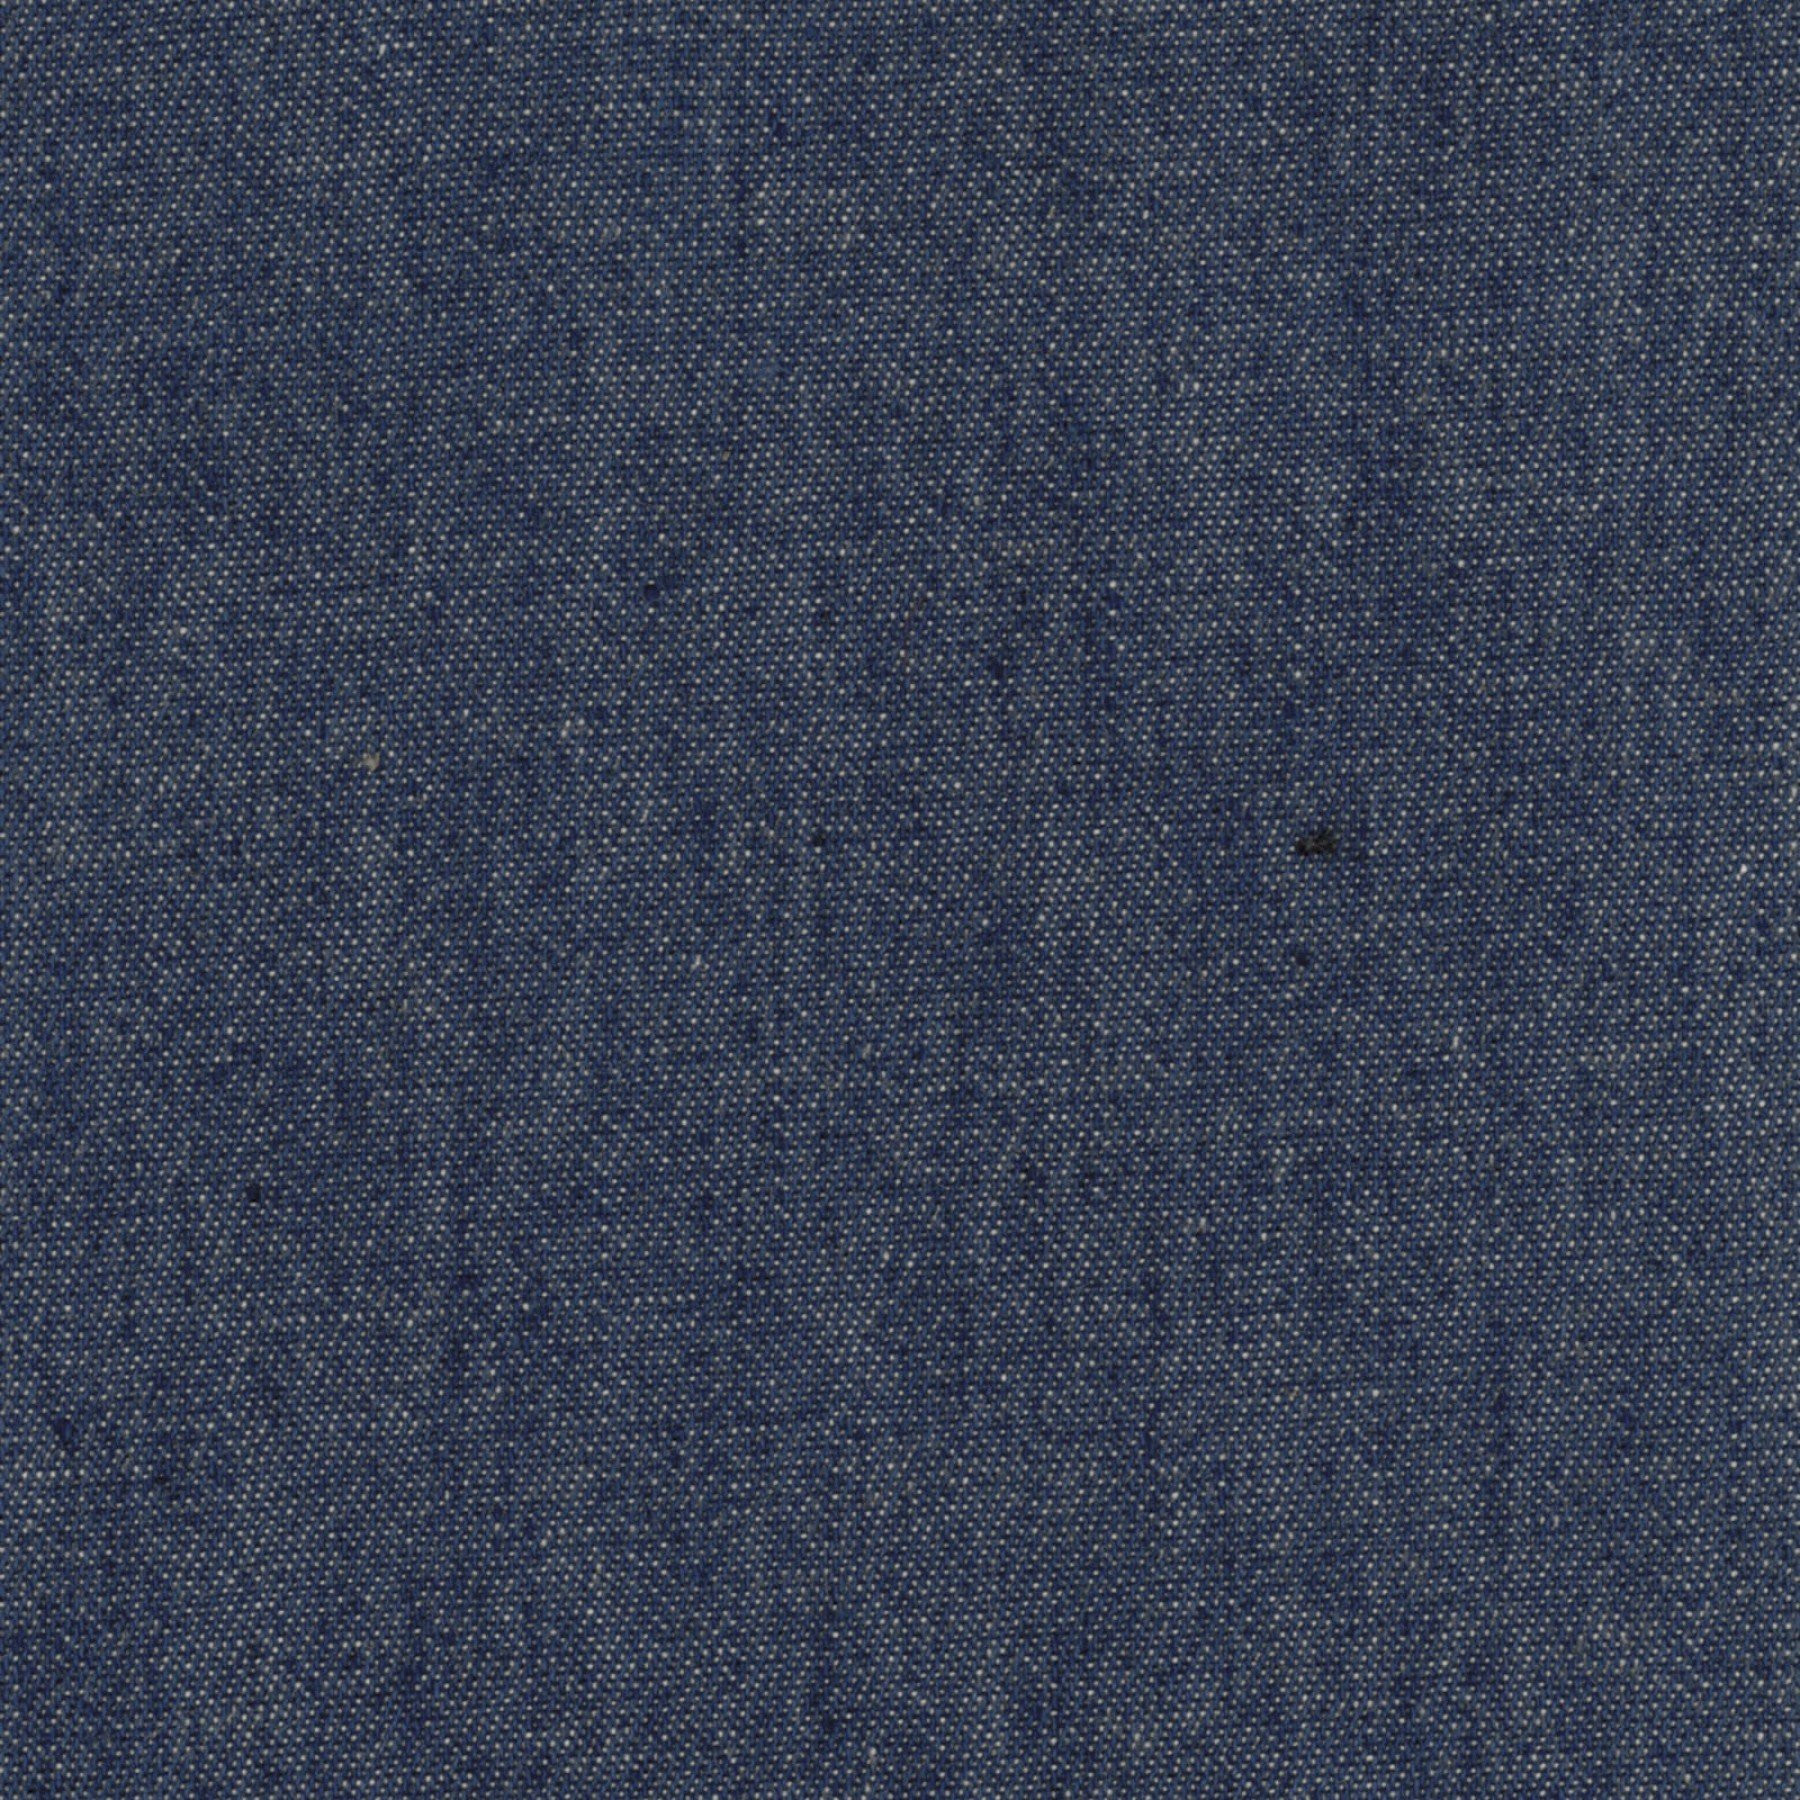 Polyester Cotton Twill Fabric Mercerized CVC 60/40 20*16 128*60 235 GSM